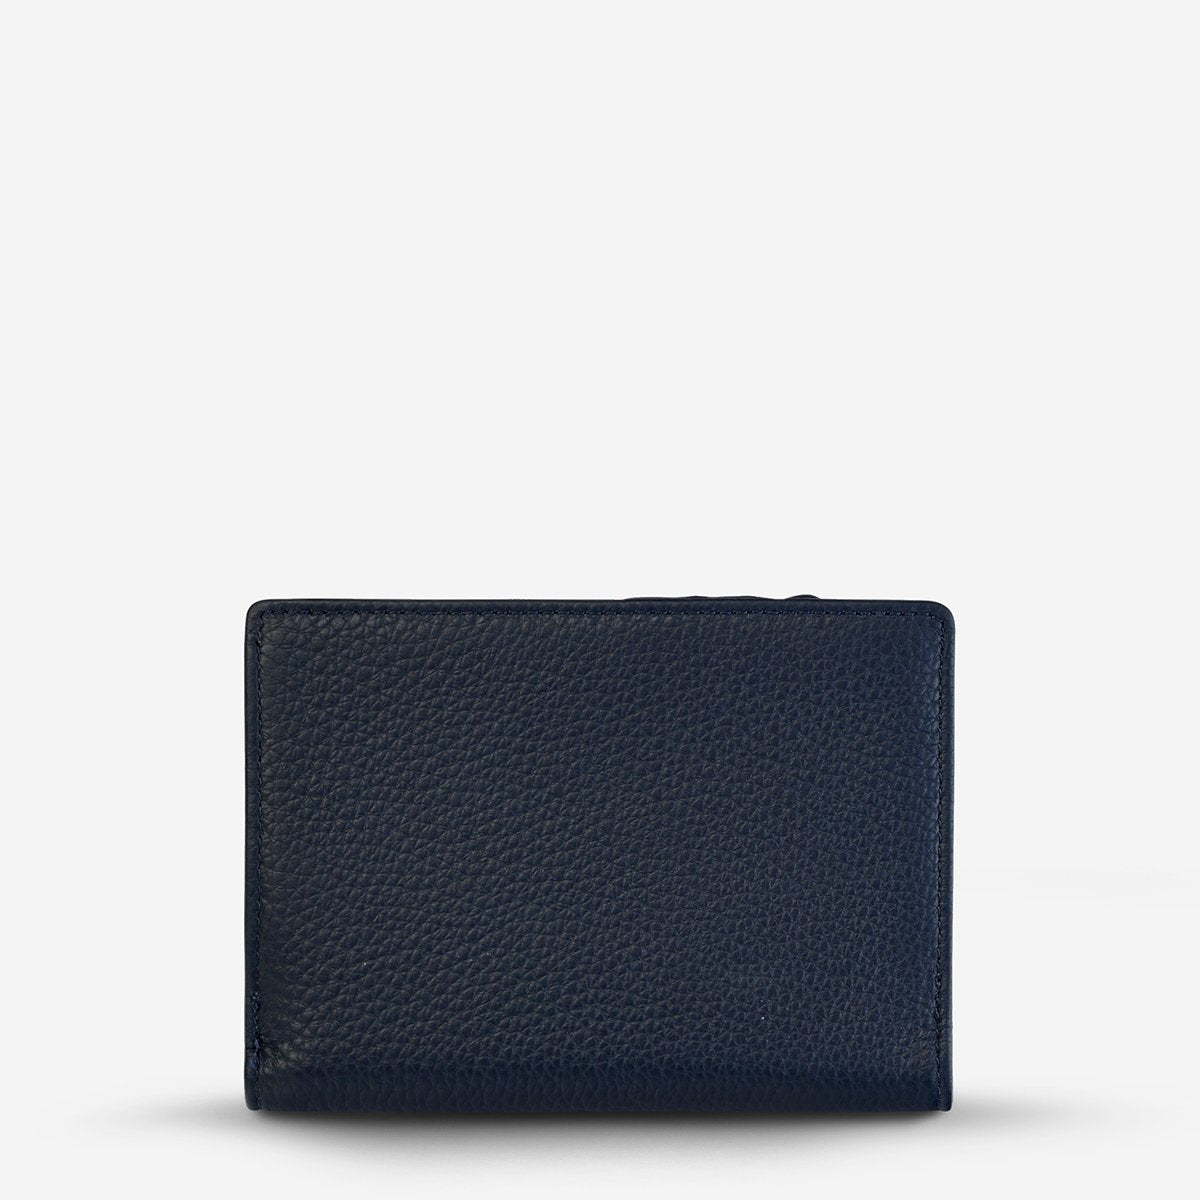 Insurgency Leather Wallet in Navy Blue